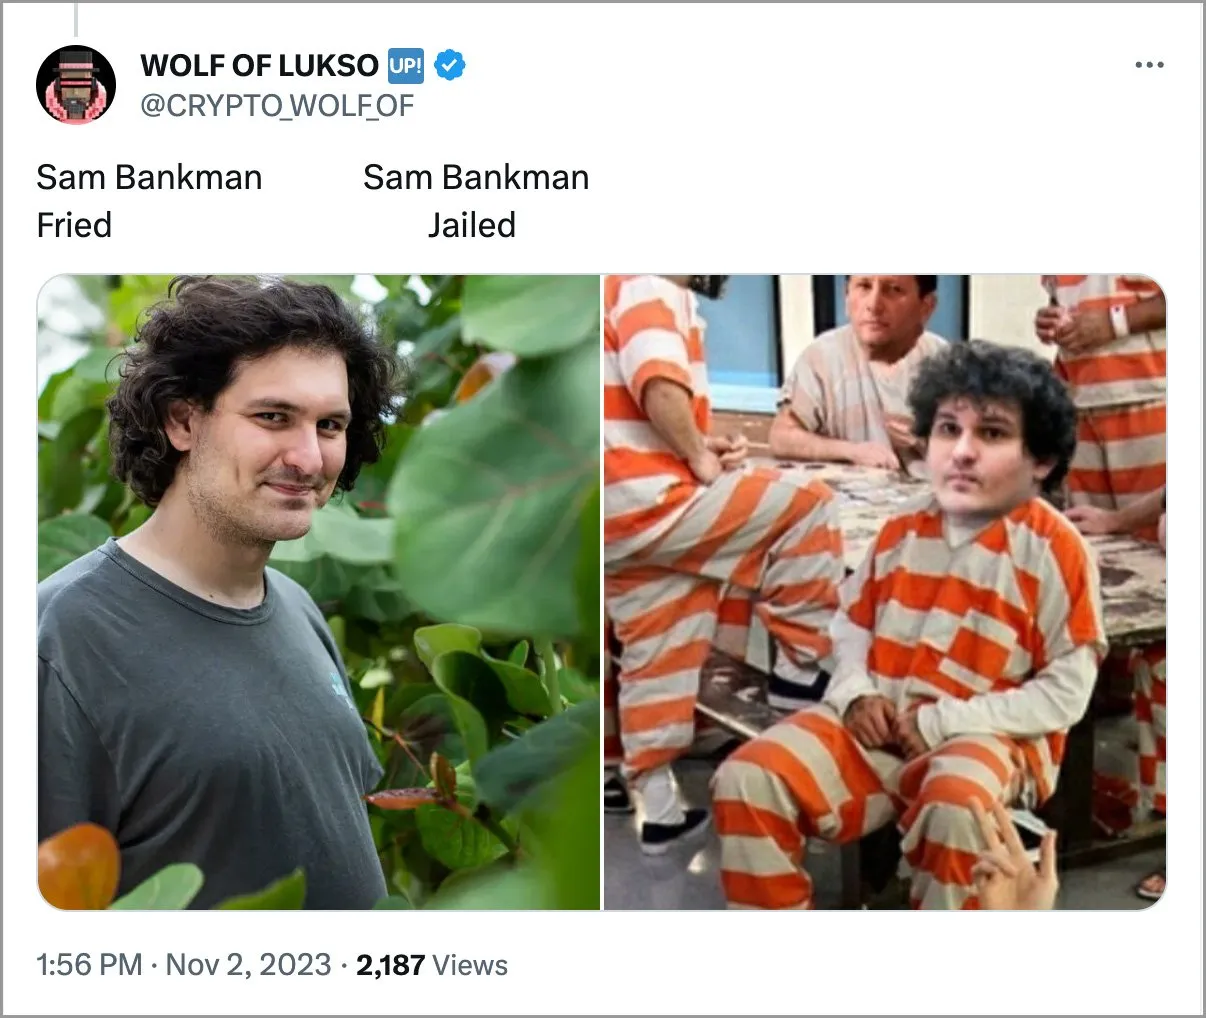 Sam Bankman vangistati